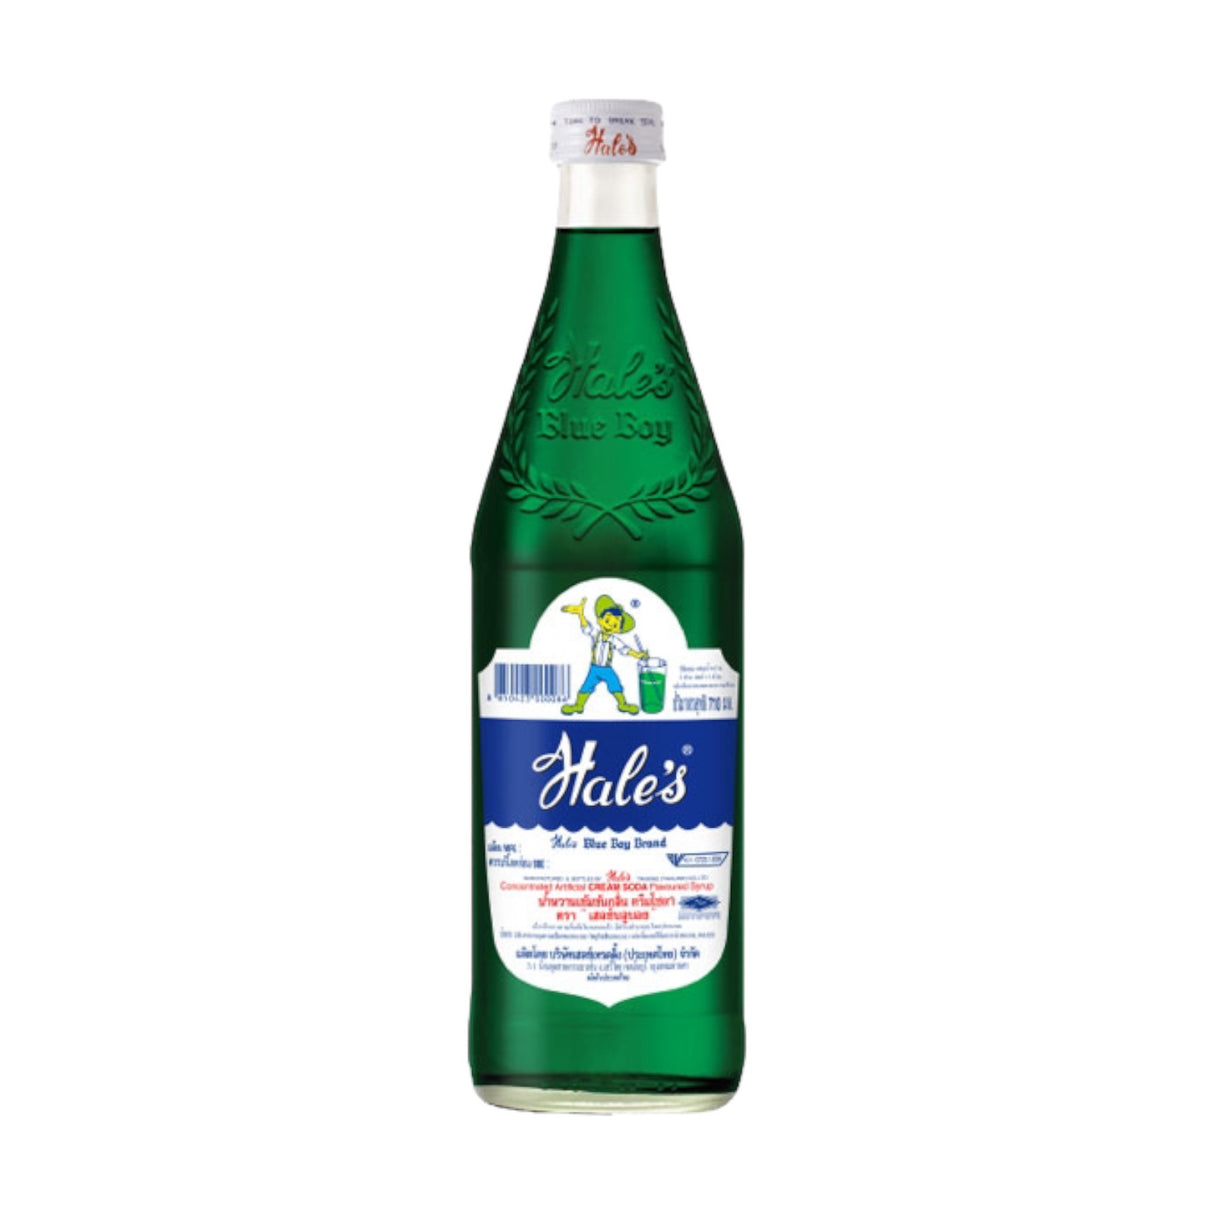 Hale's Blue Boy brand Cream Soda flavored syrup